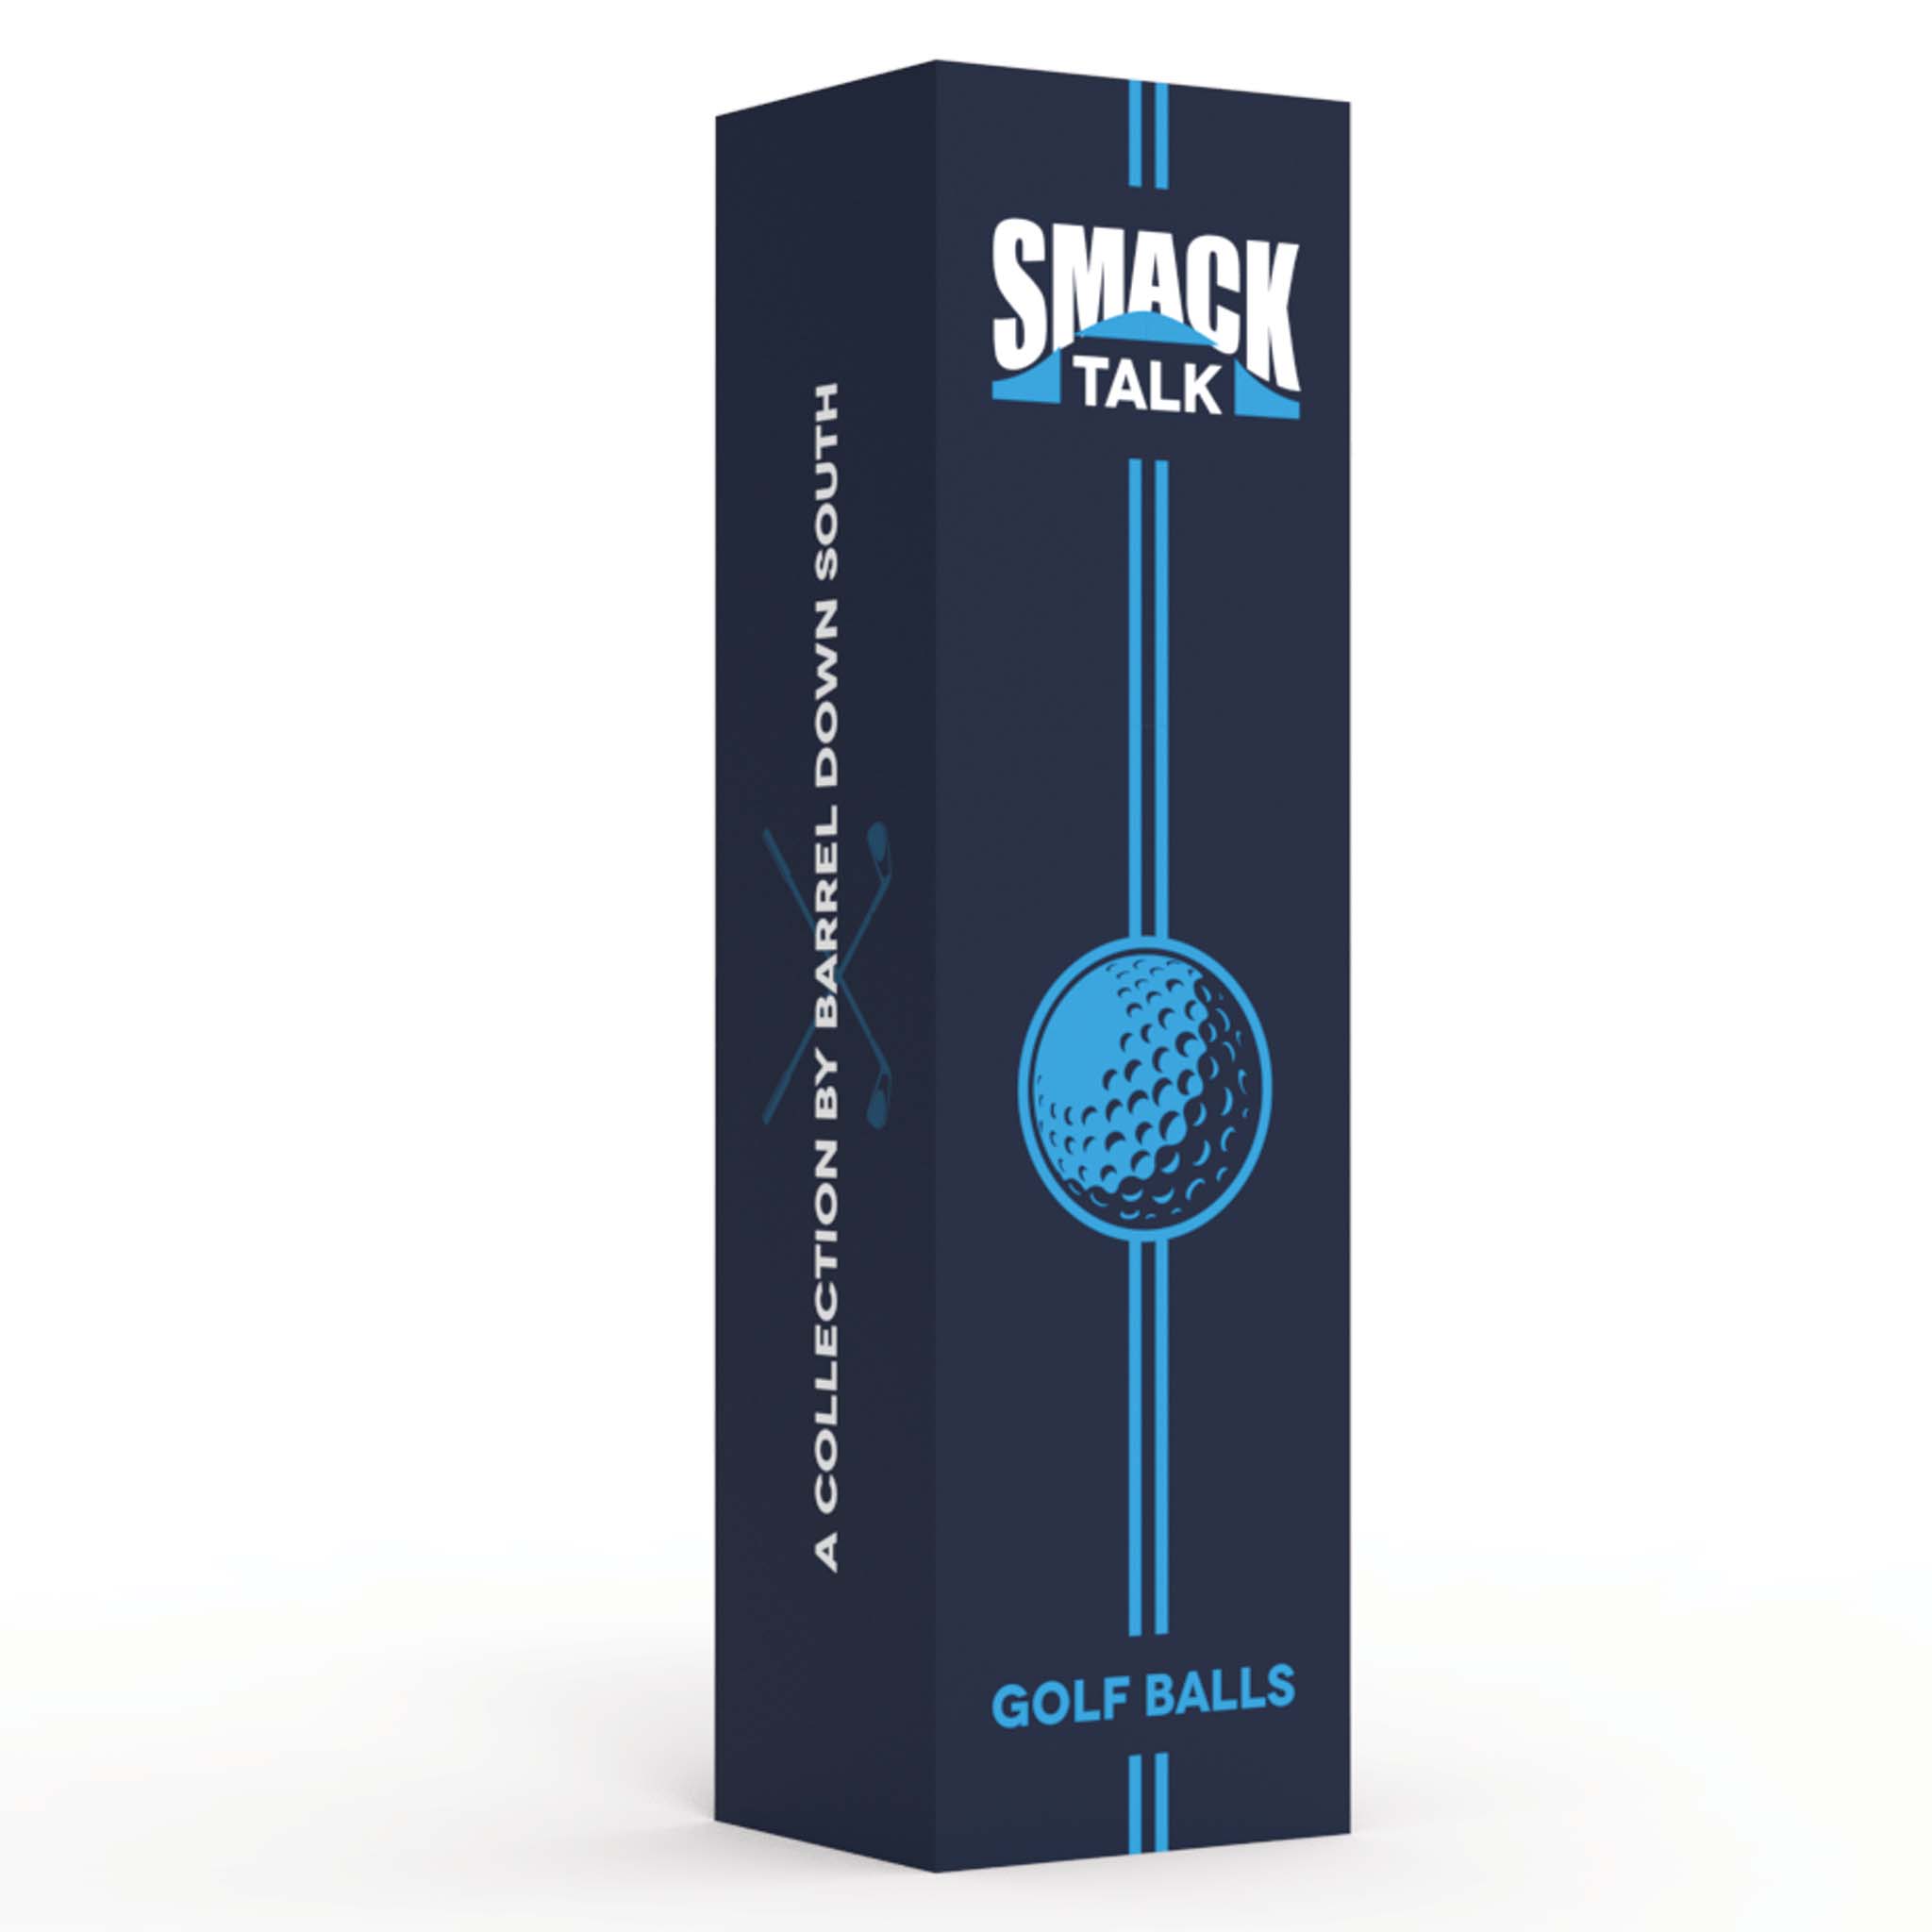 Barrel Down South - Smack Talk Golf Balls Volume 2 Golfing Gift Golf Cart